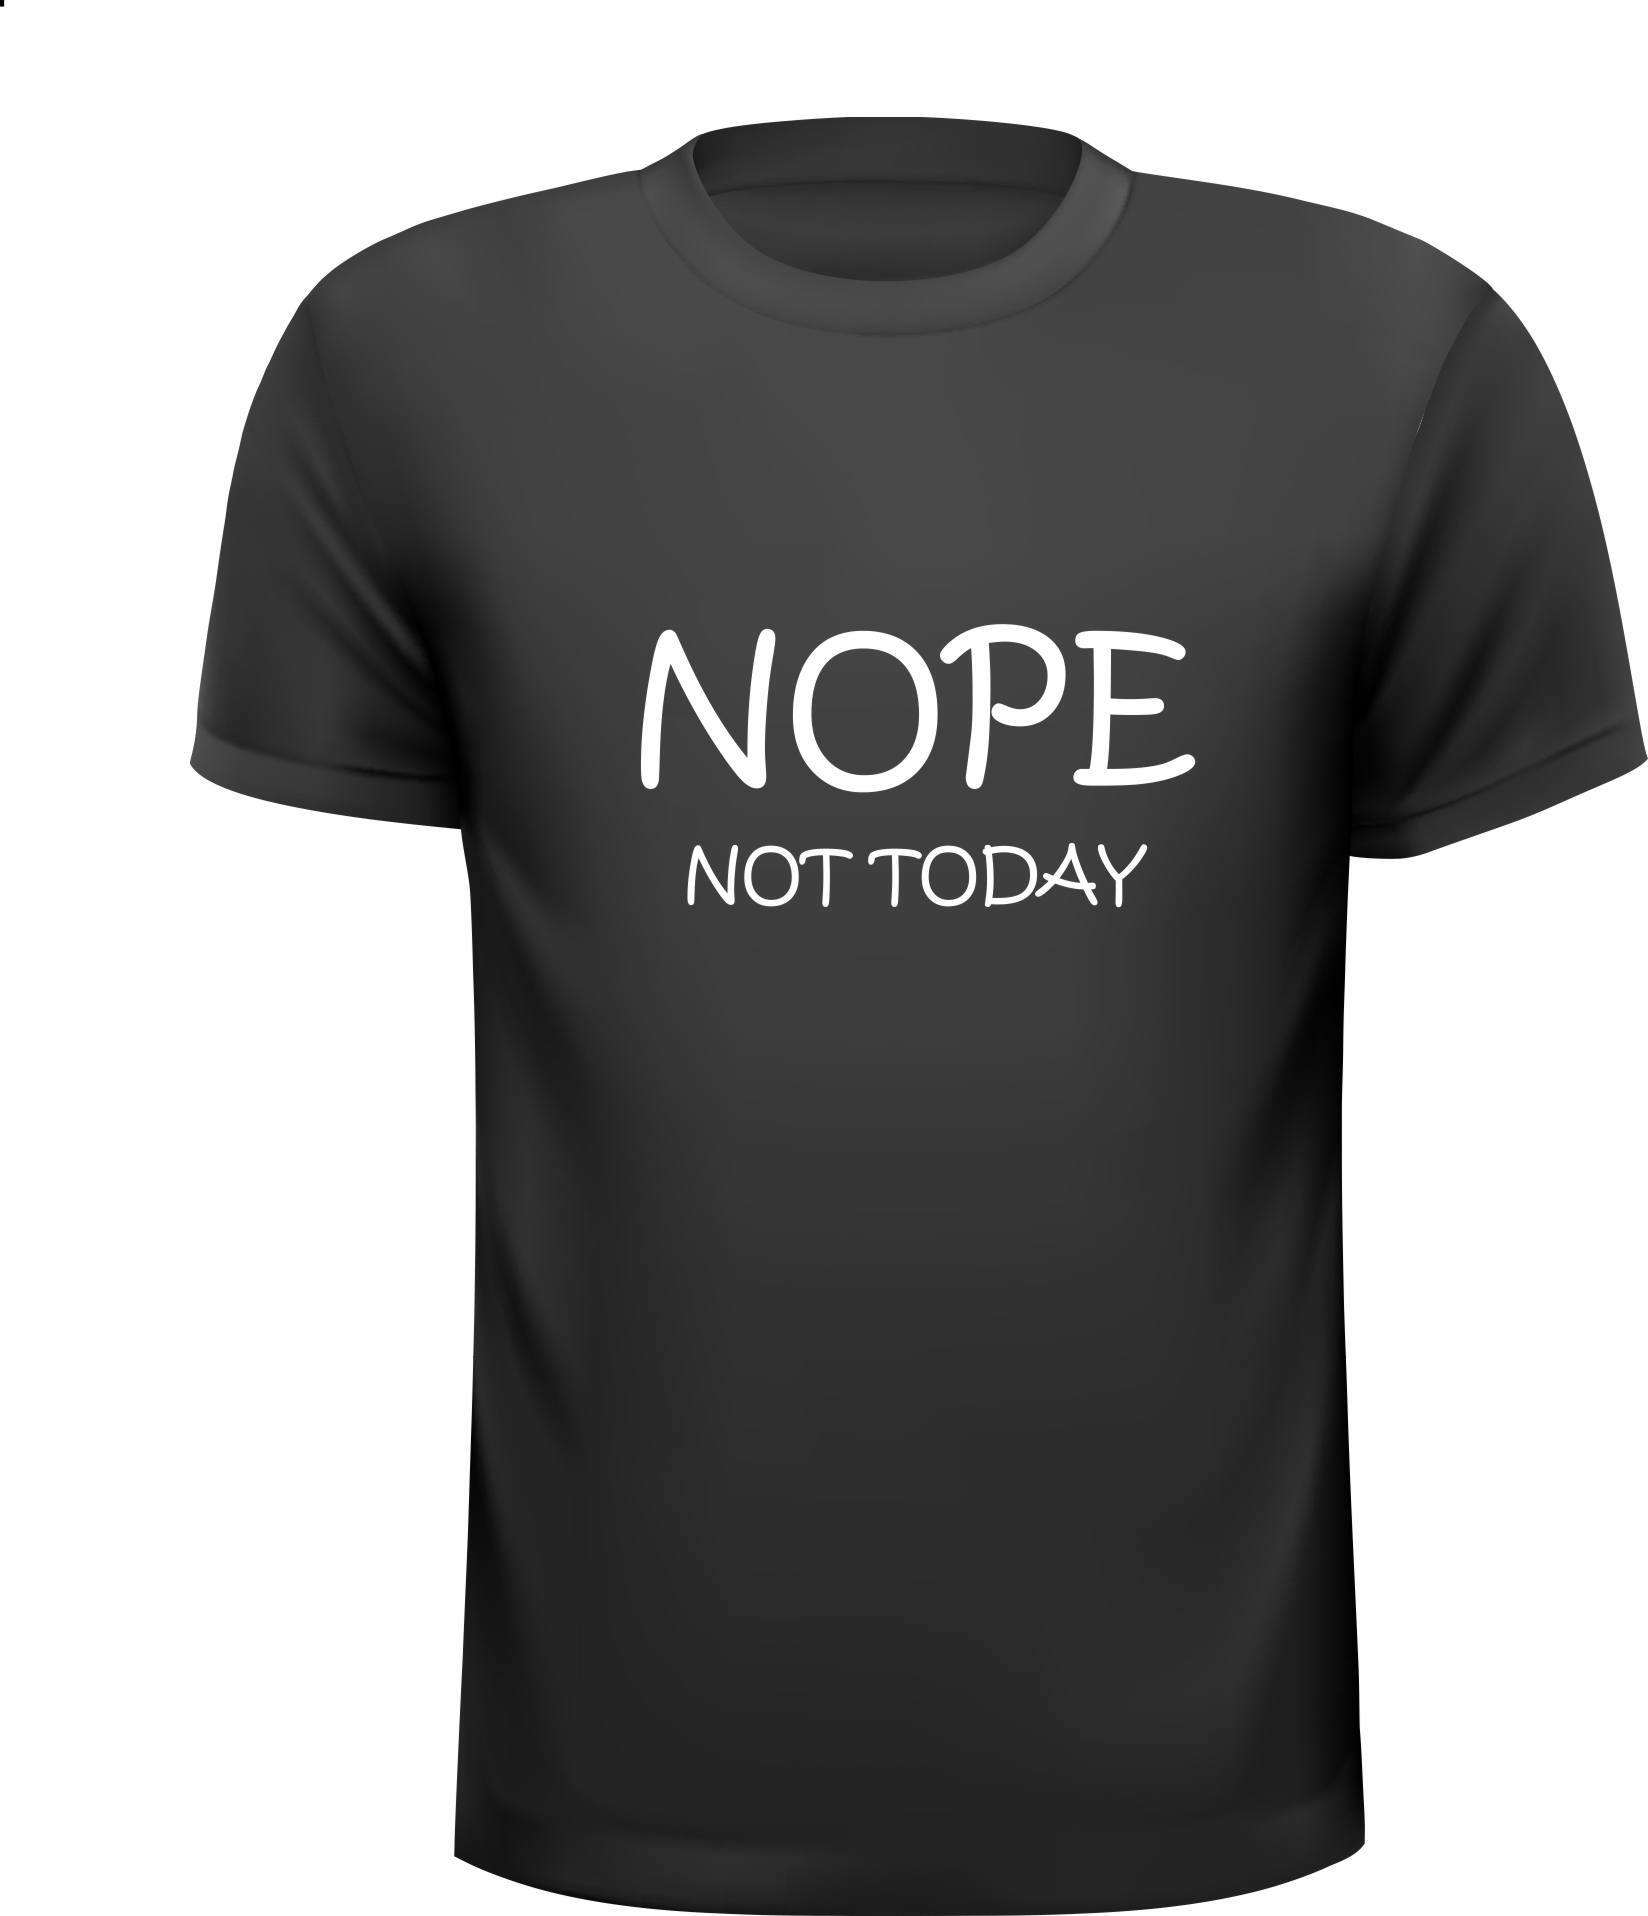 Nope not today T-shirt tekst